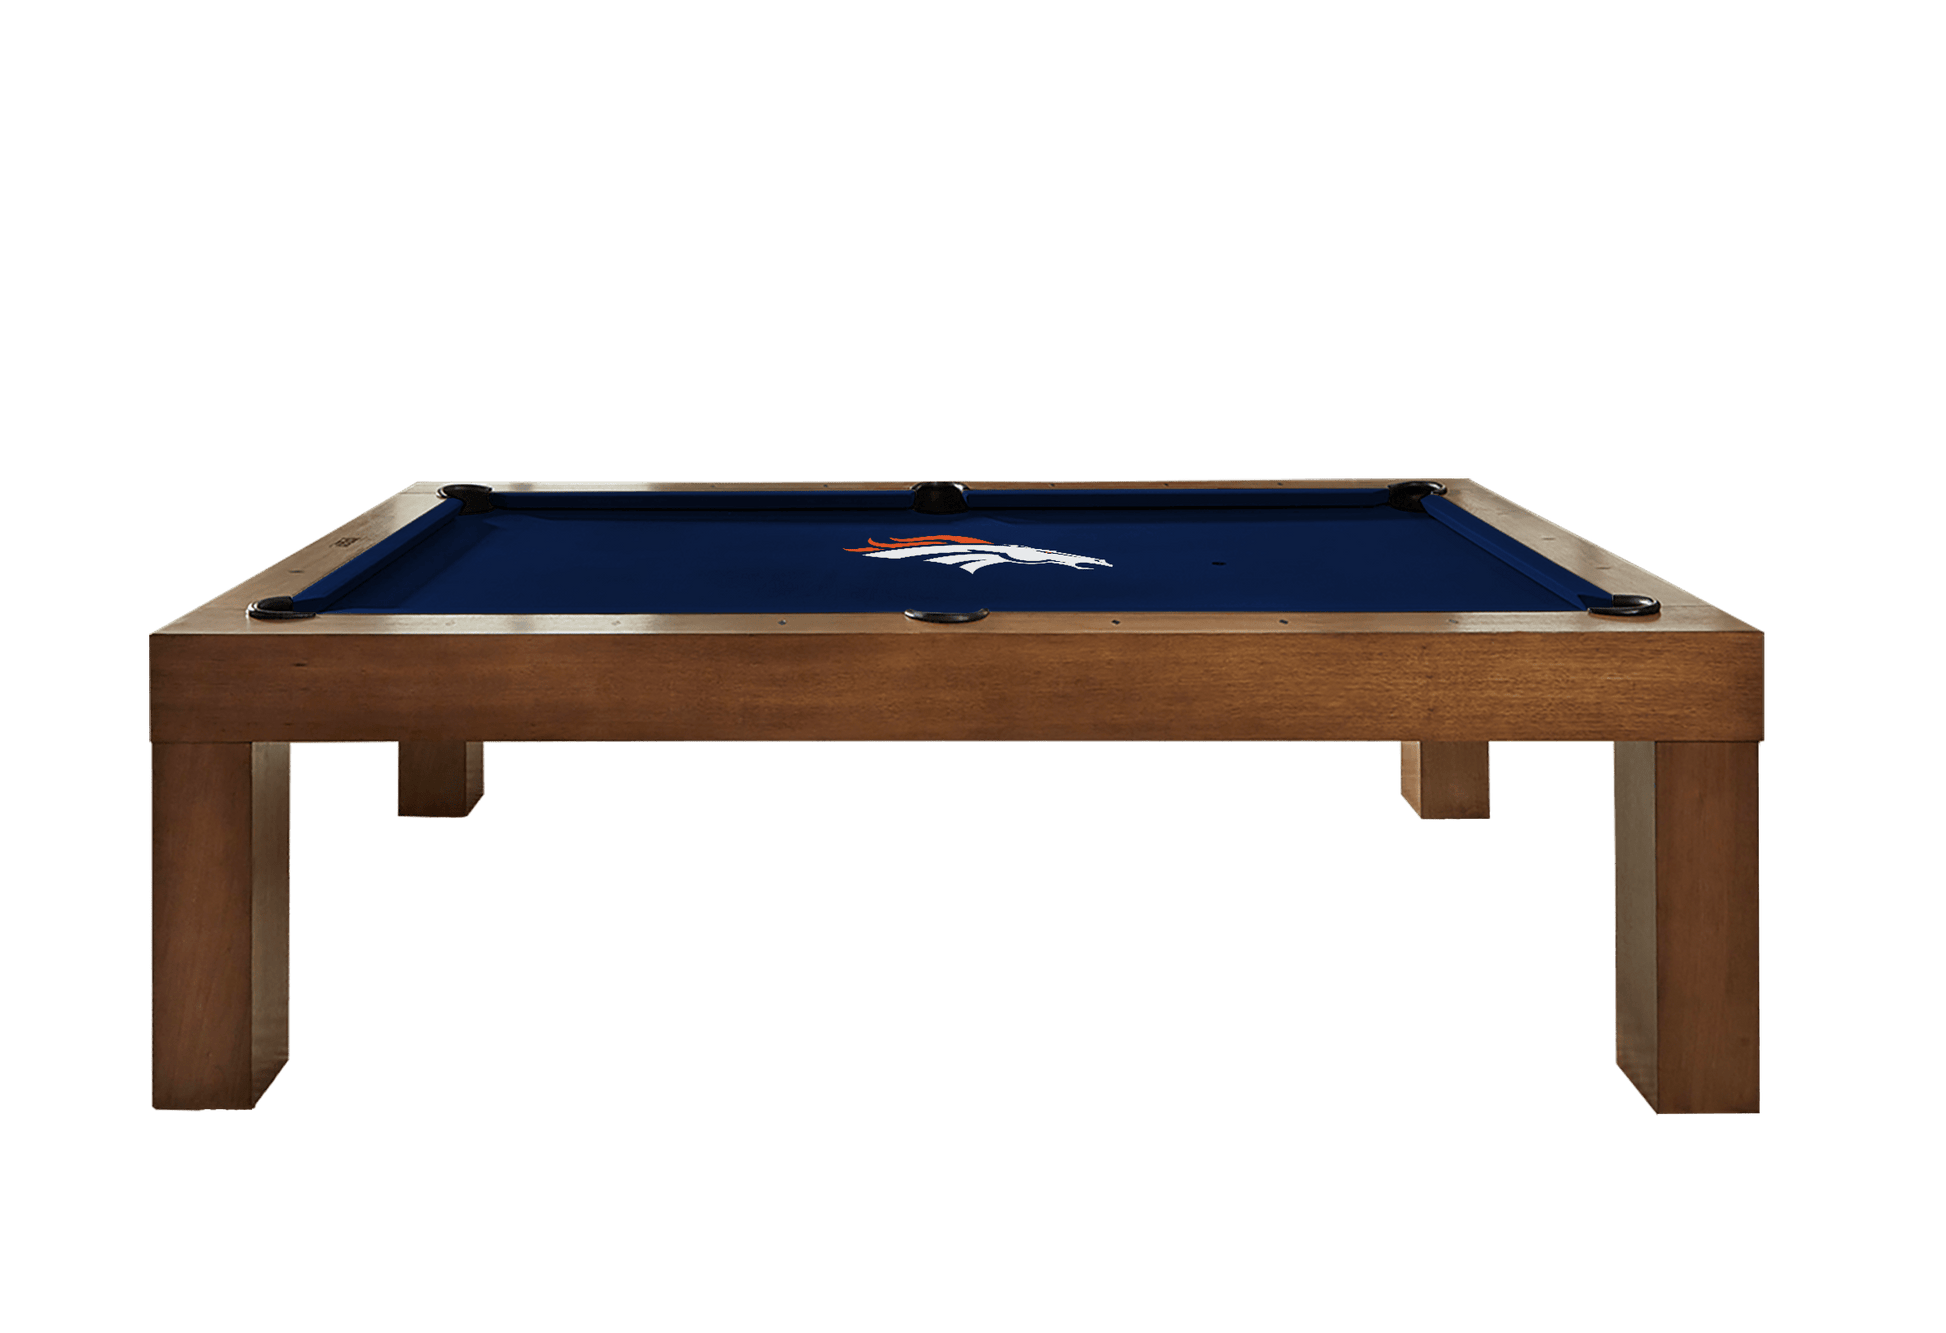 Denver Broncos Premium Pool Table Bundle - Walnut Pool Bundle Home Arcade Games   